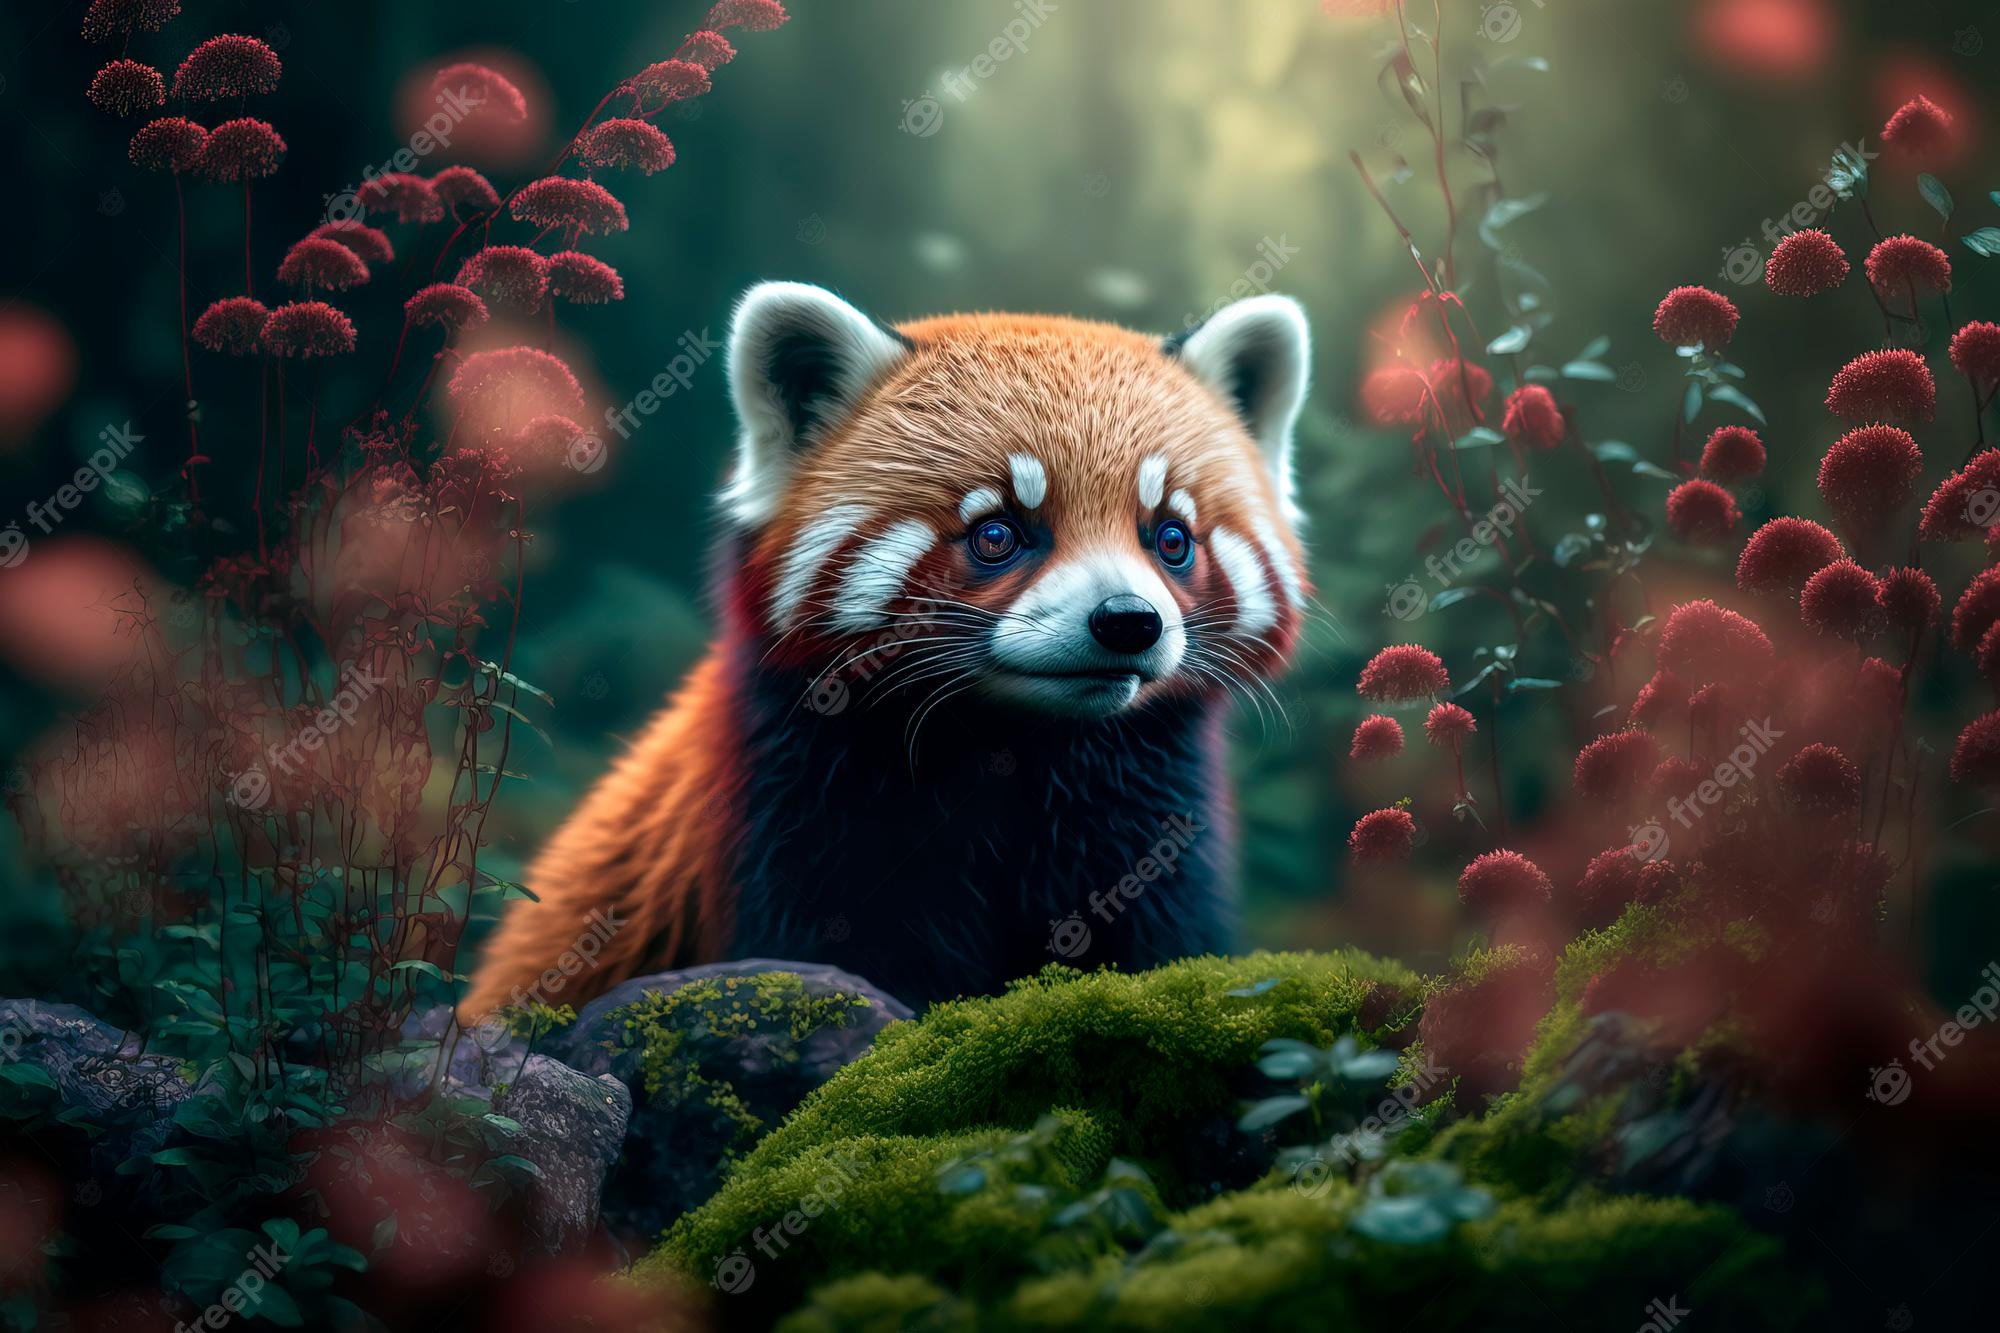 Premium Photo. Red panda in the jungle